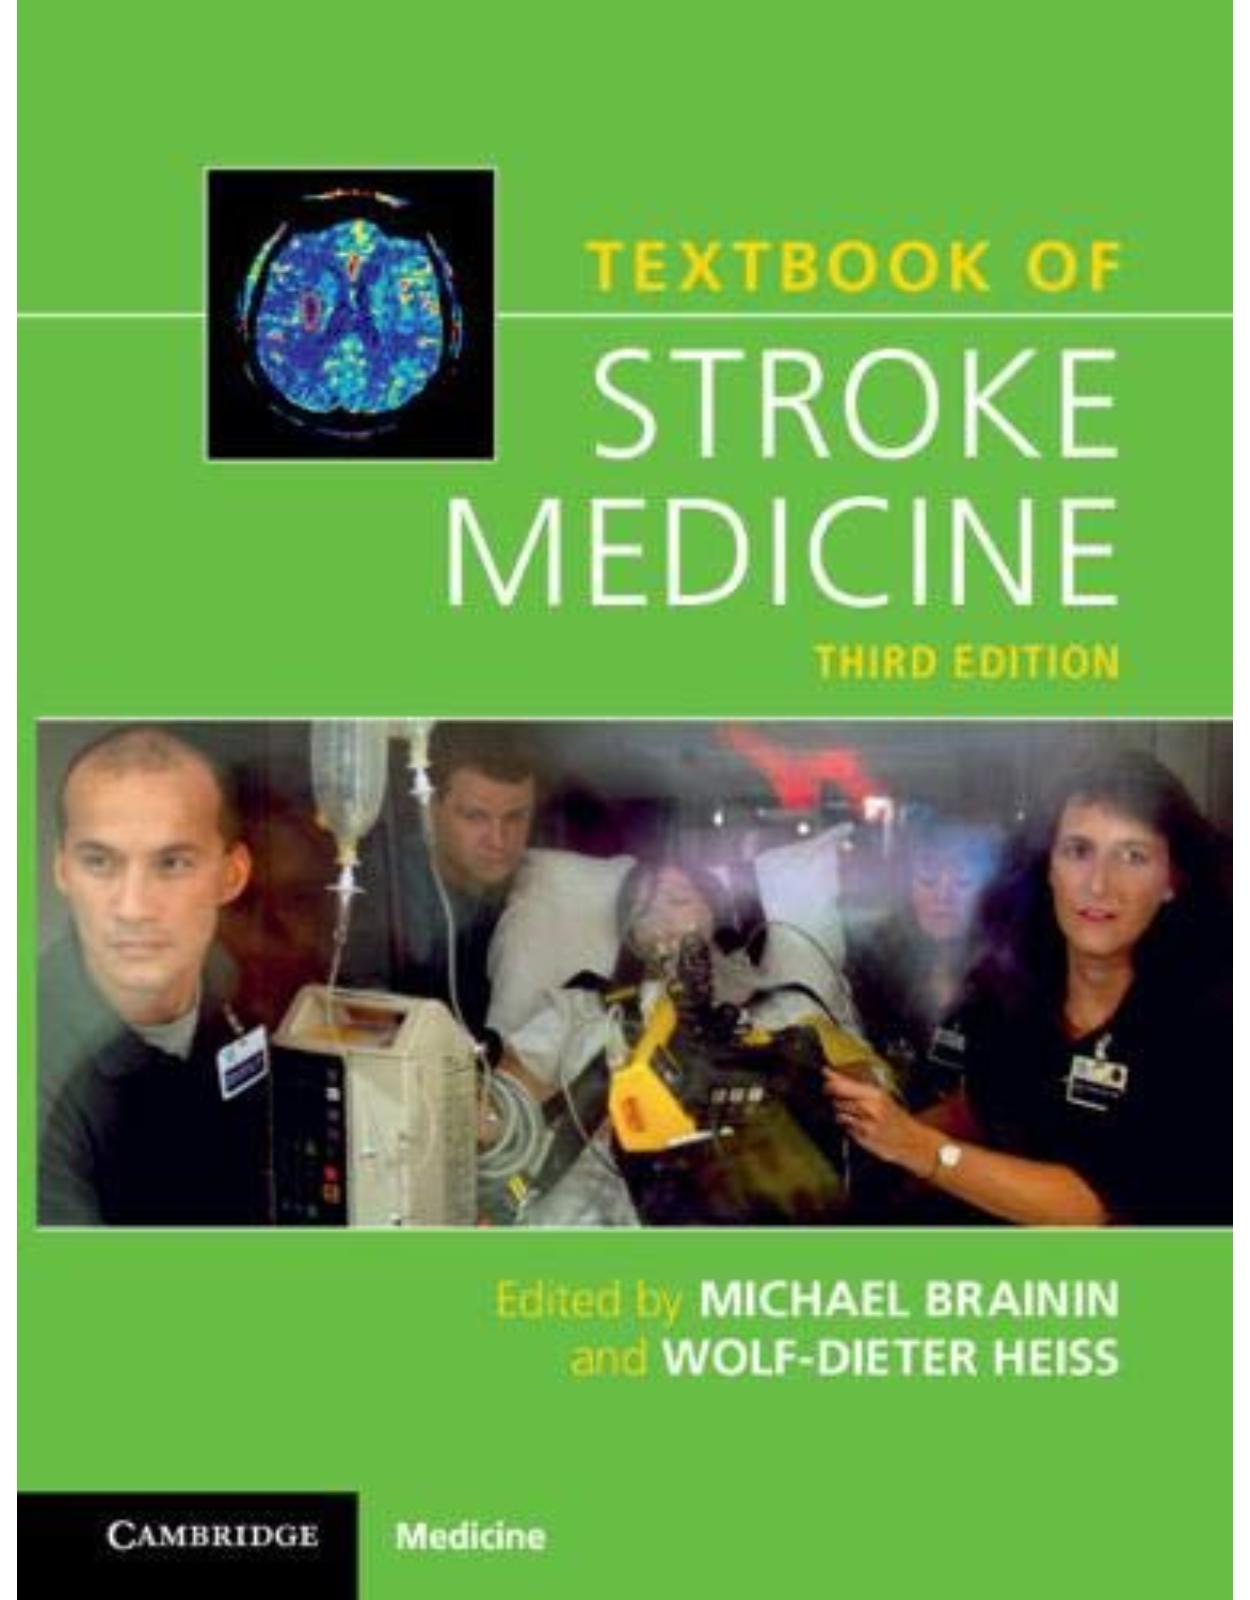 Textbook of Stroke Medicine. 3rd Edition